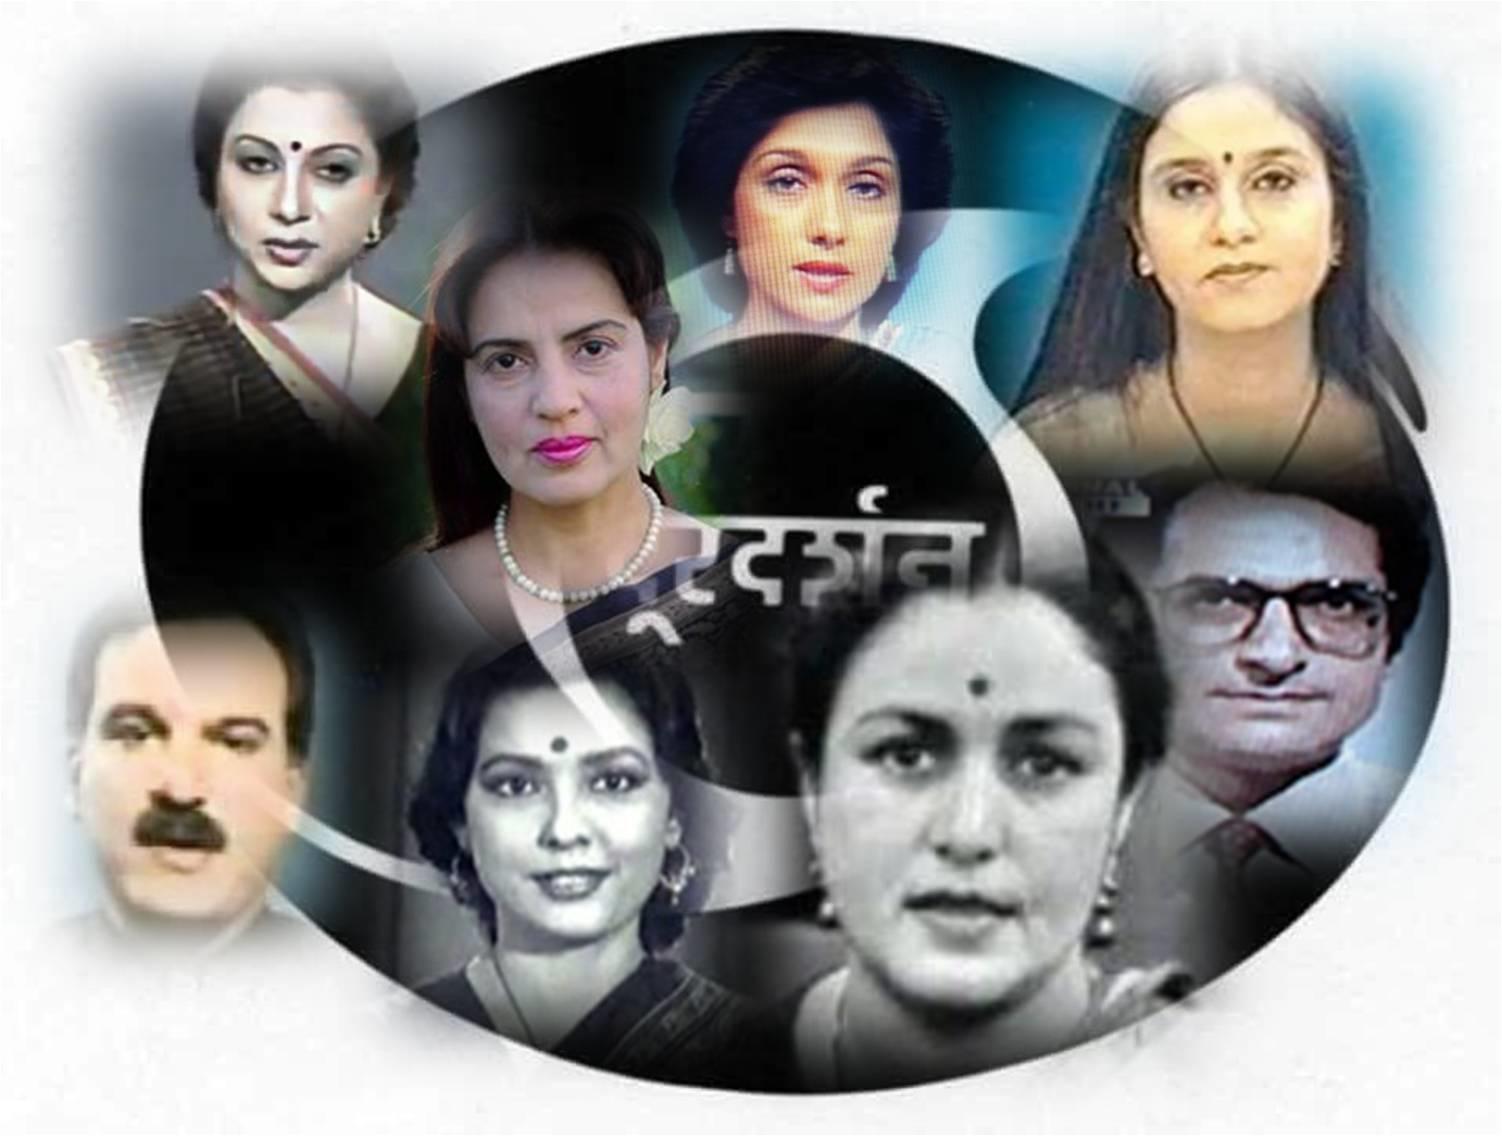 61st birthday of India's favorite broadcaster - Doordarshan